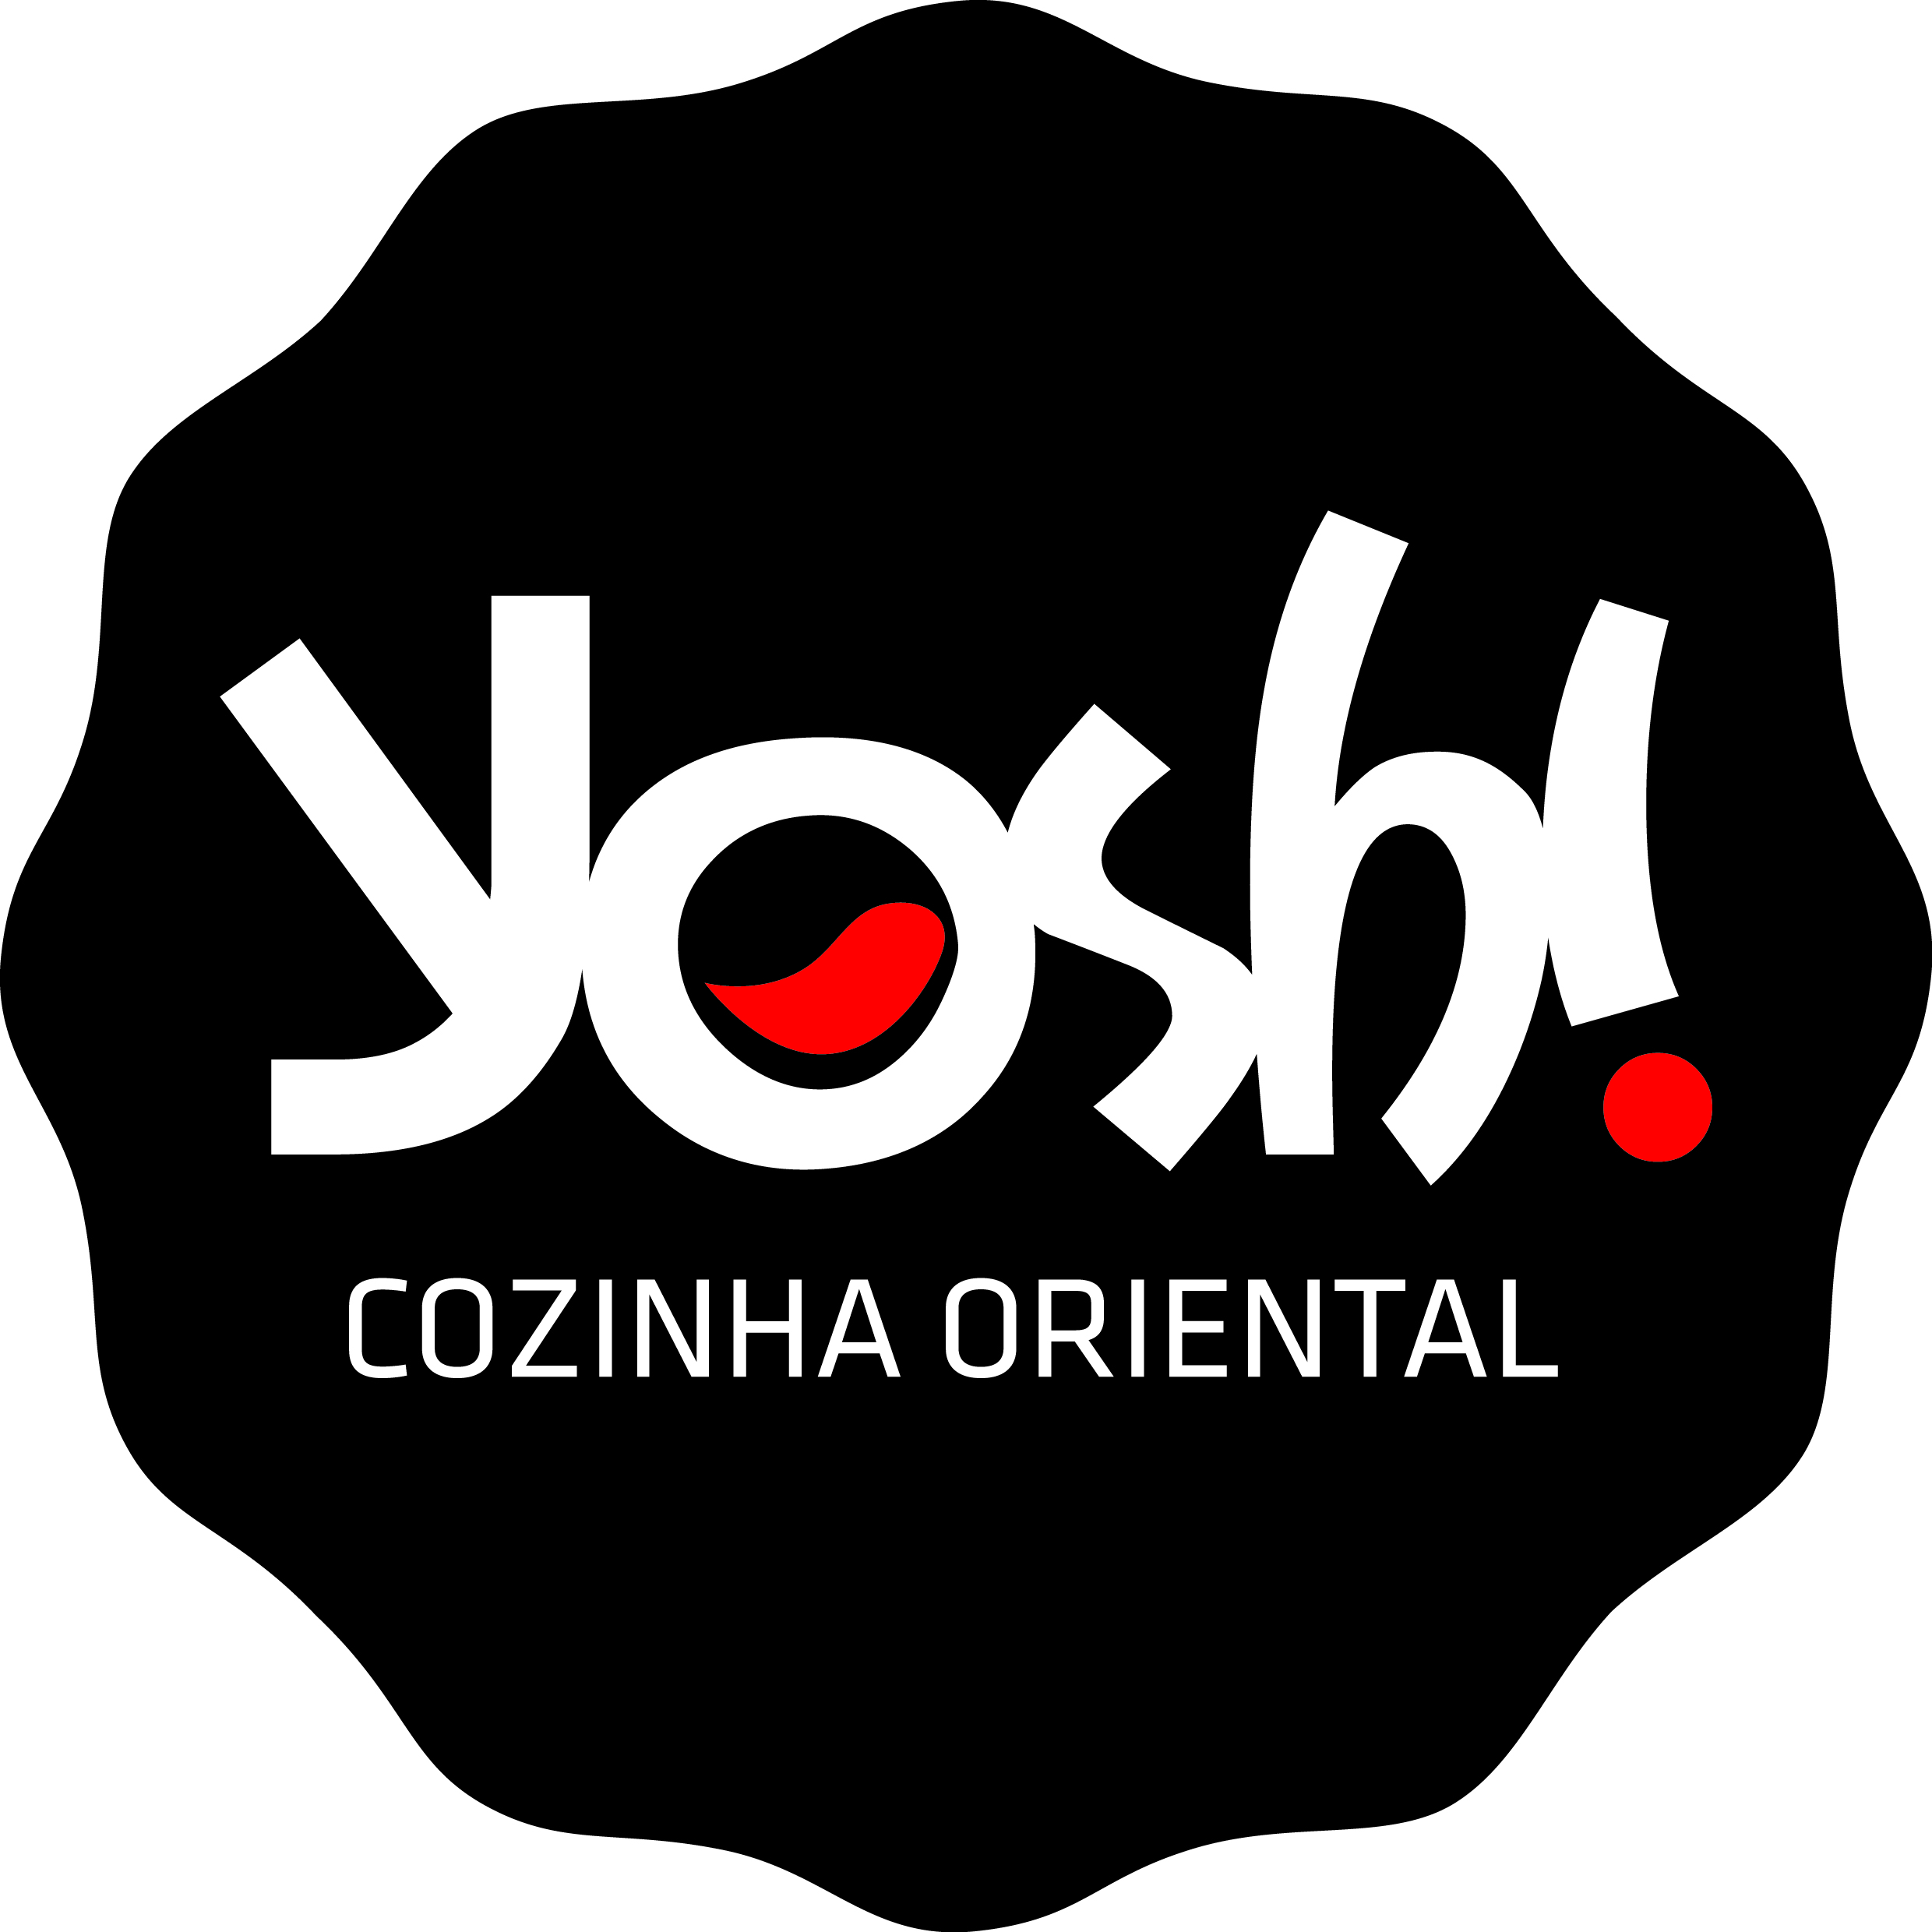 YOSH! COZINHA ORIENTAL